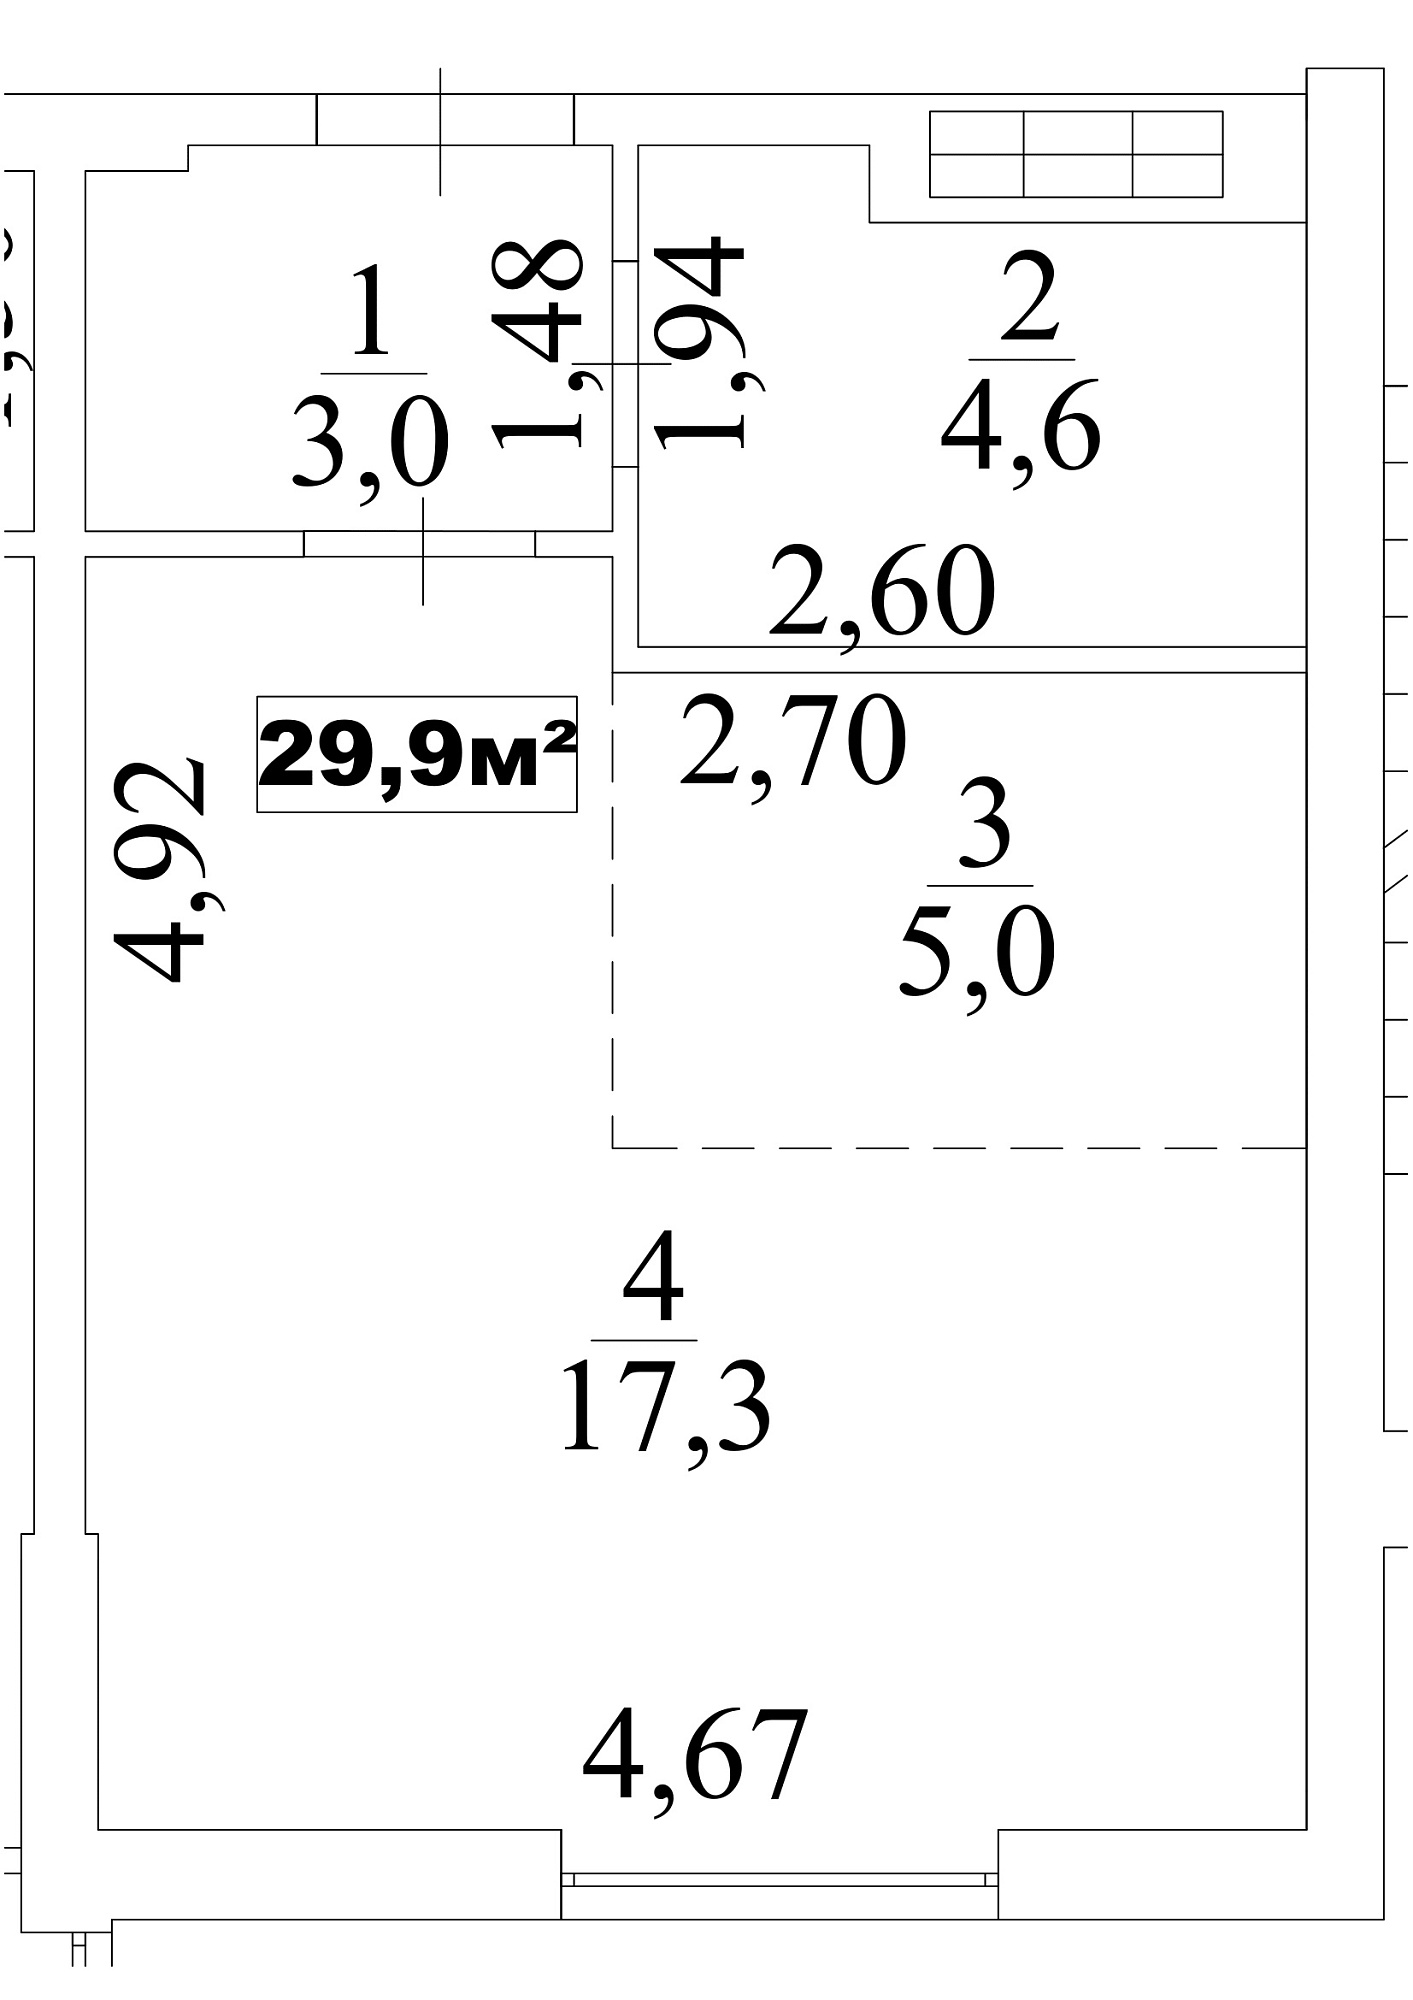 Planning Smart flats area 29.9m2, AB-10-10/0082а.